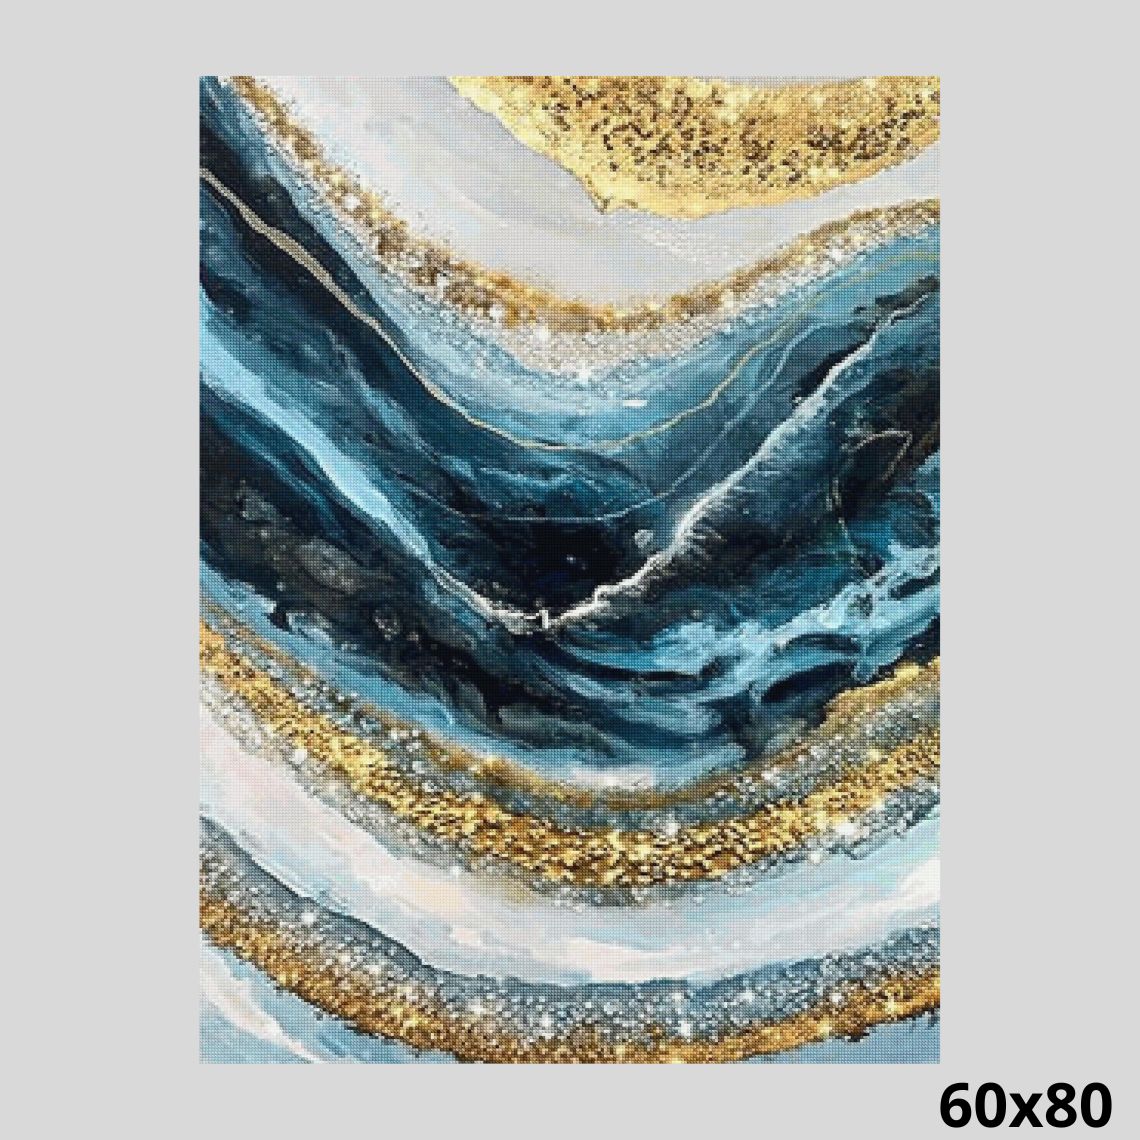 Stone Veins of Gold 60x80 - Diamond Painting